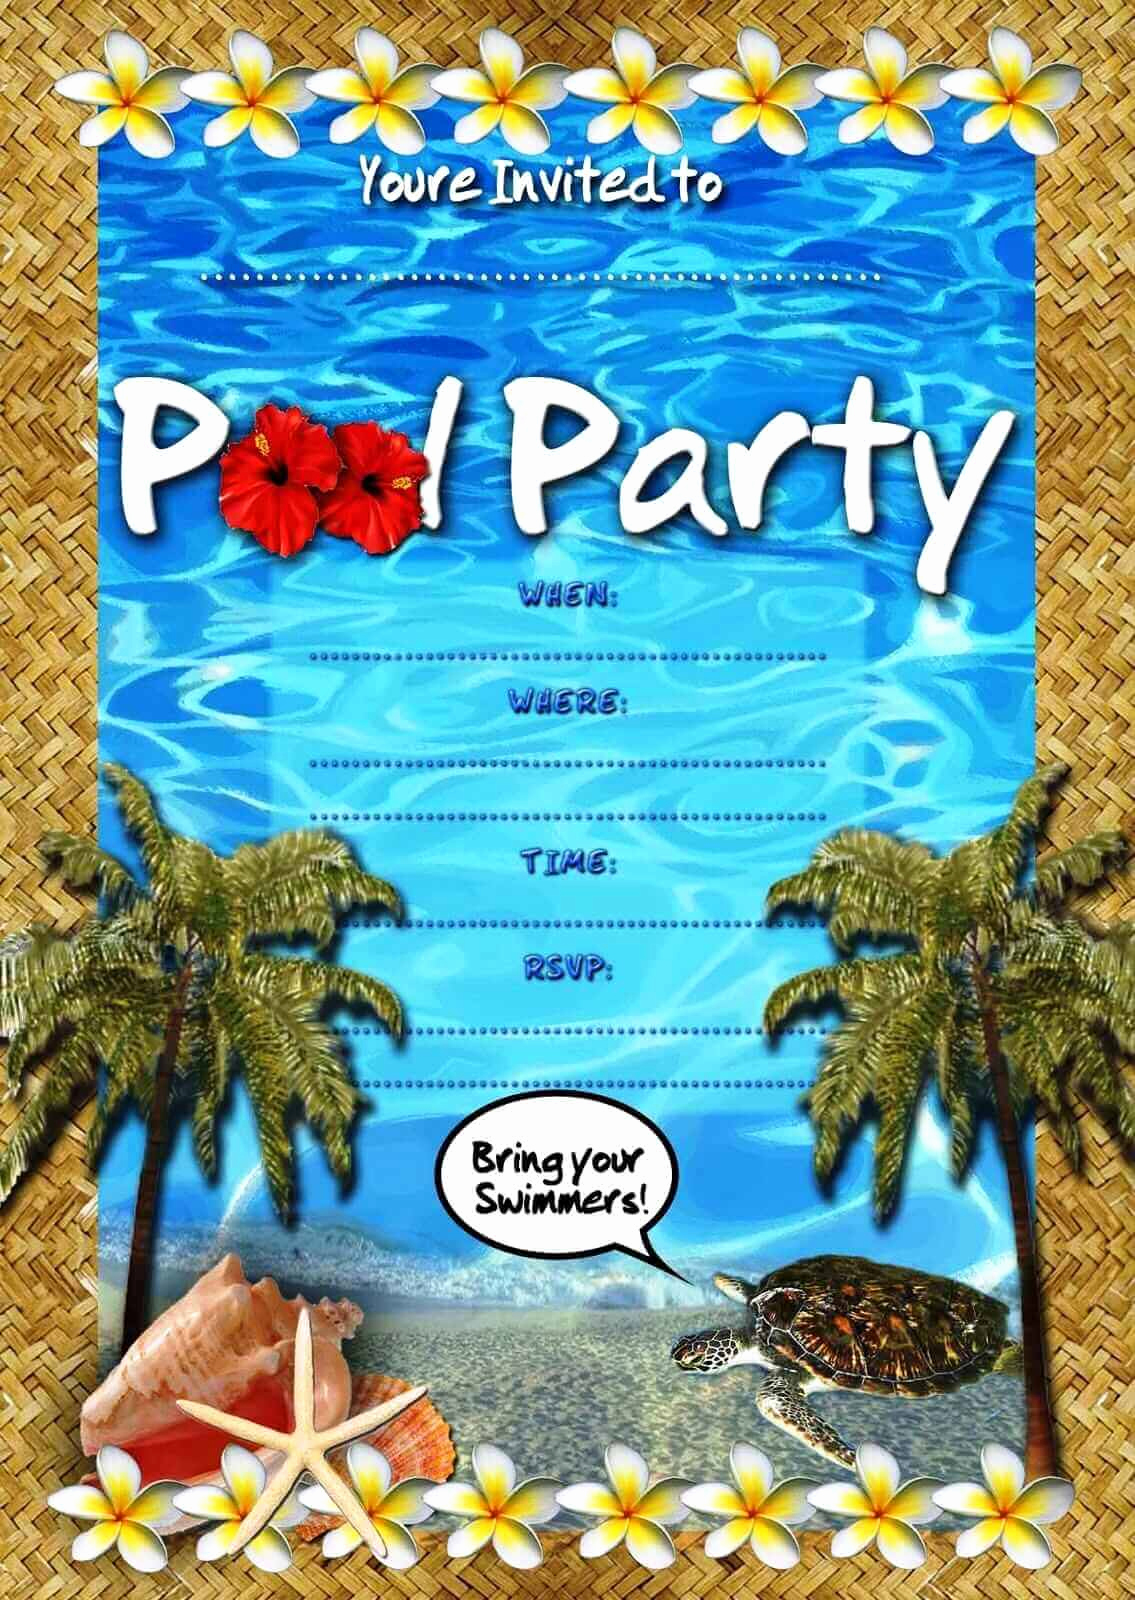 Pool Party Invitation Ideas Inspirational Pool Party Invitation Ideas